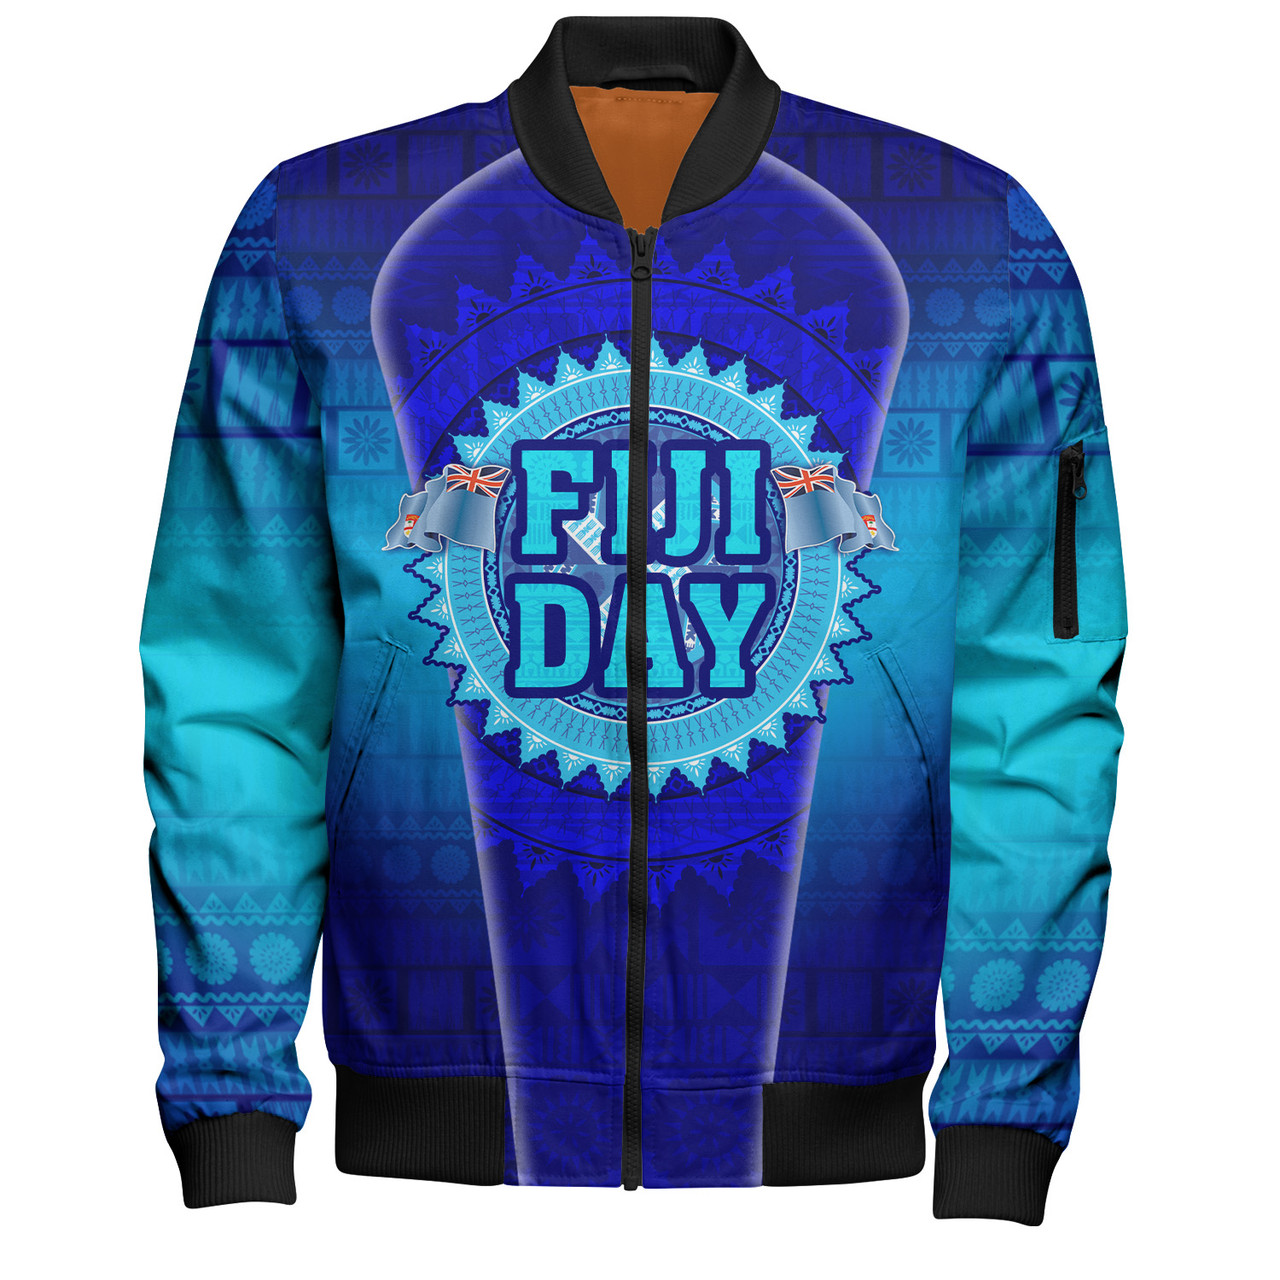 Fiji Bomber Jacket Fiji Day Style